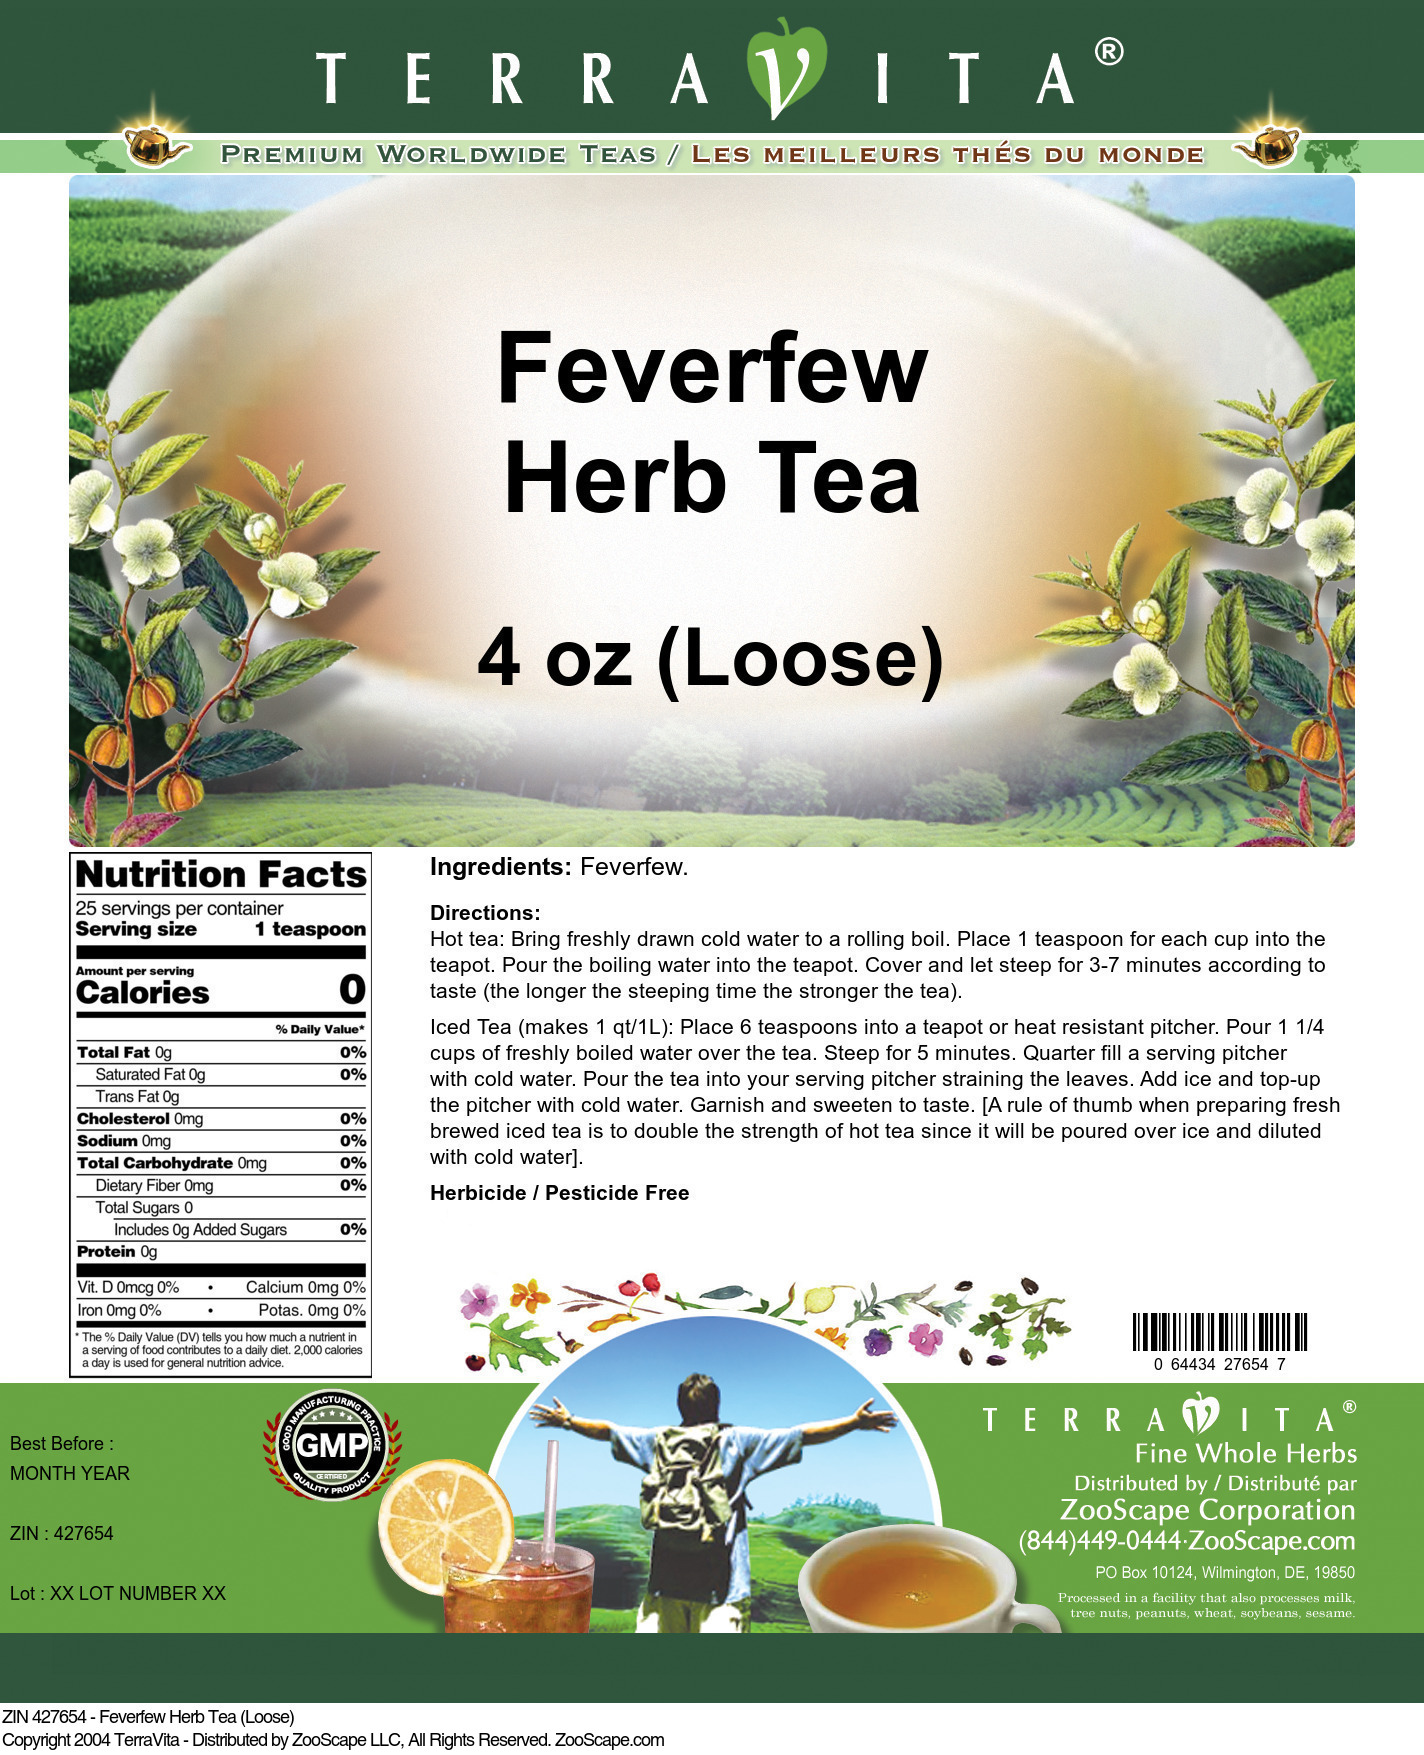 Feverfew Herb Tea (Loose) - Label